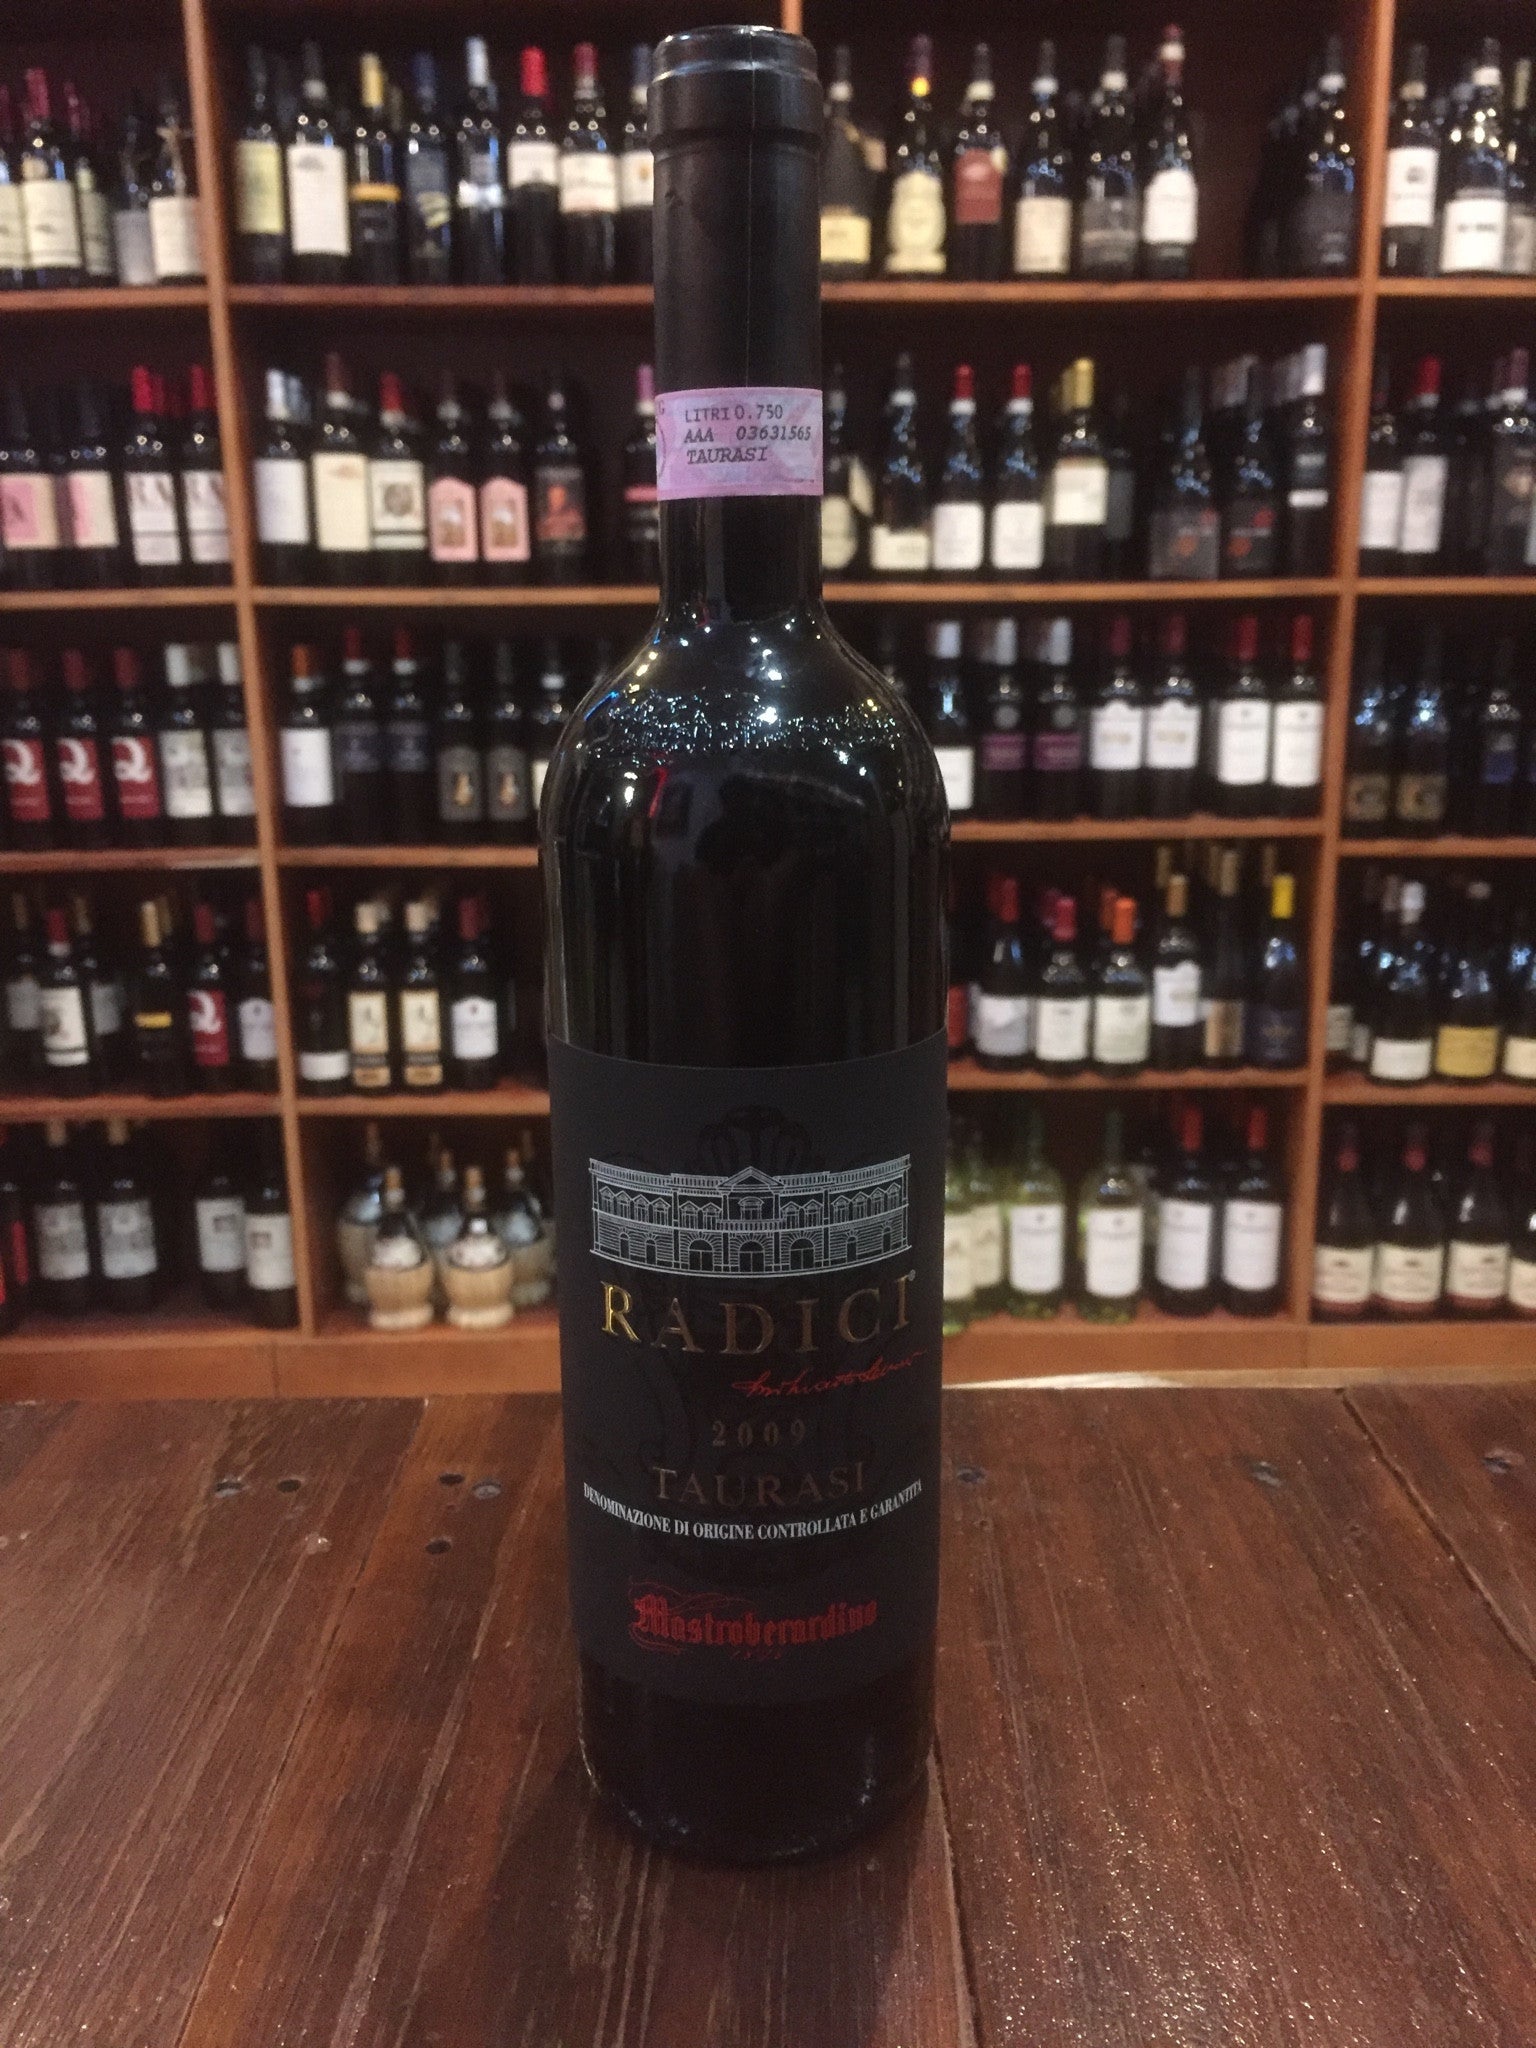 Radici Taurasi Mastroberardino 750mL a tall dark glass wine bottle with a black label and black top